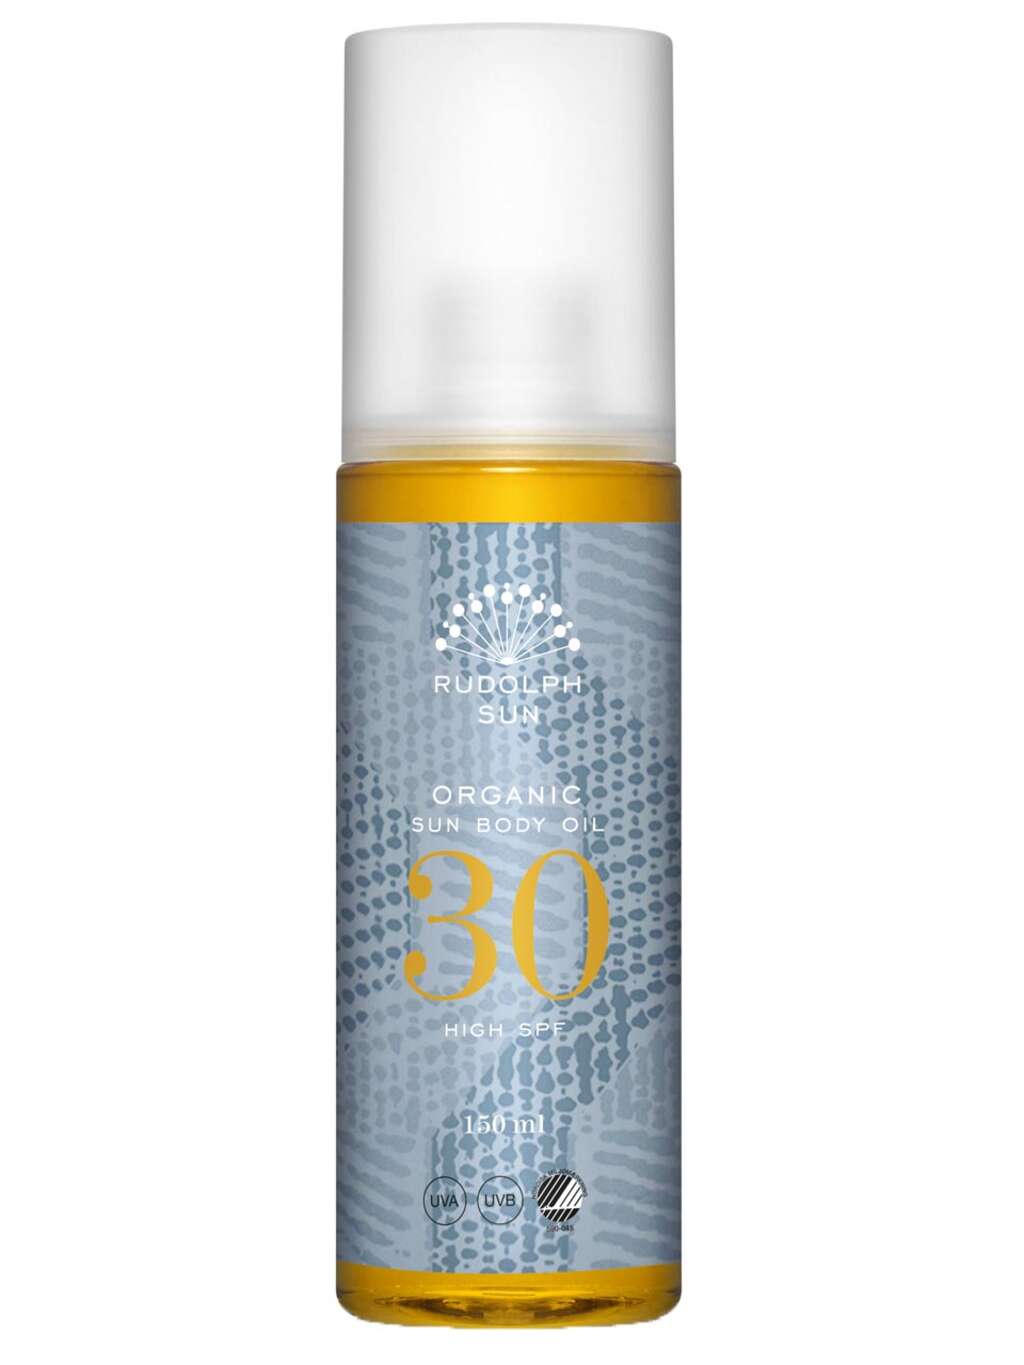 Organic Sun Body Oil 30 SPF